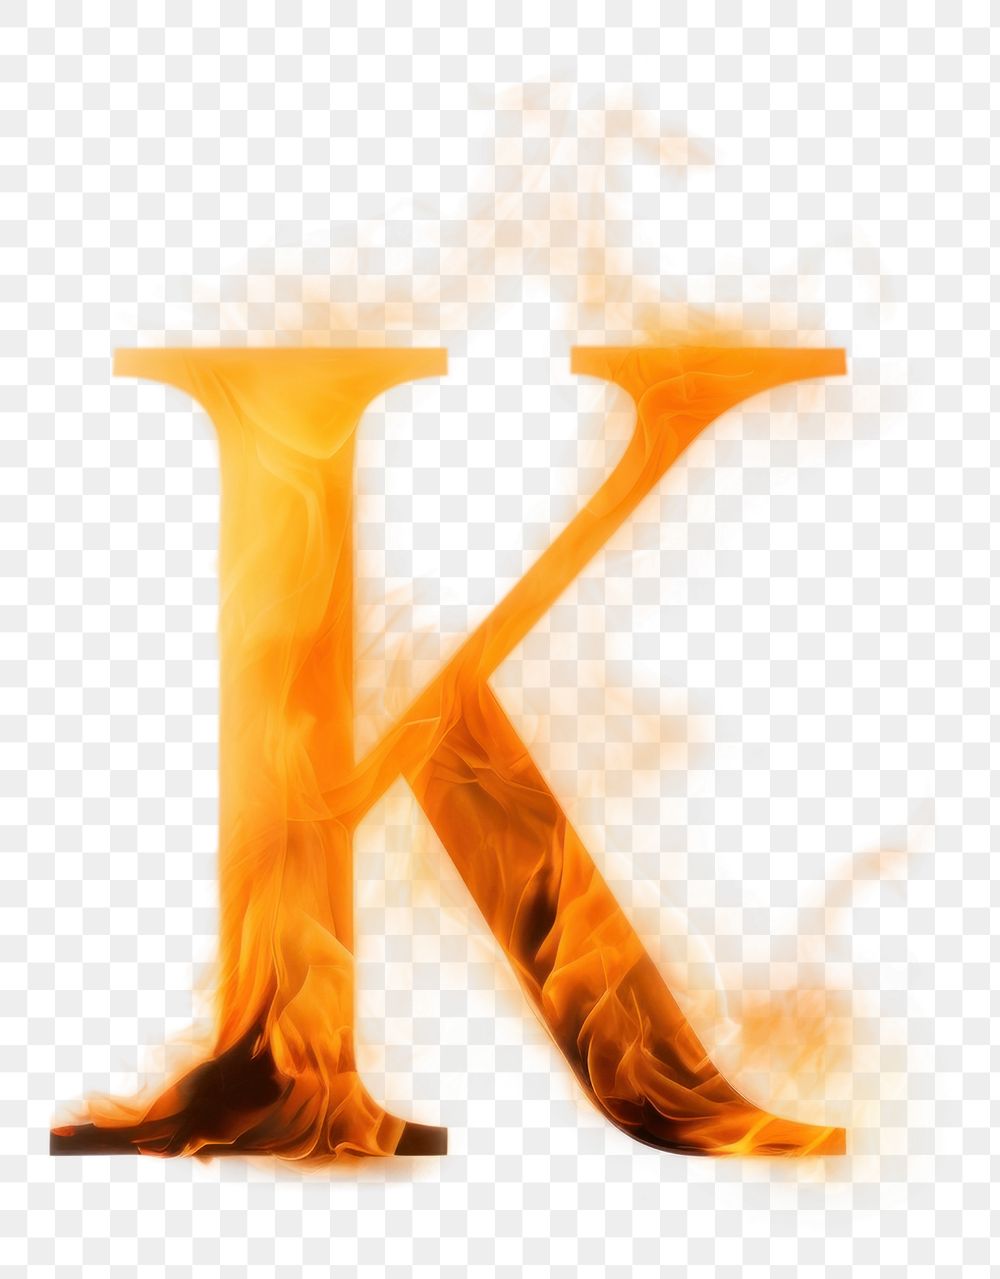 Burning letter k fire glowing burning.